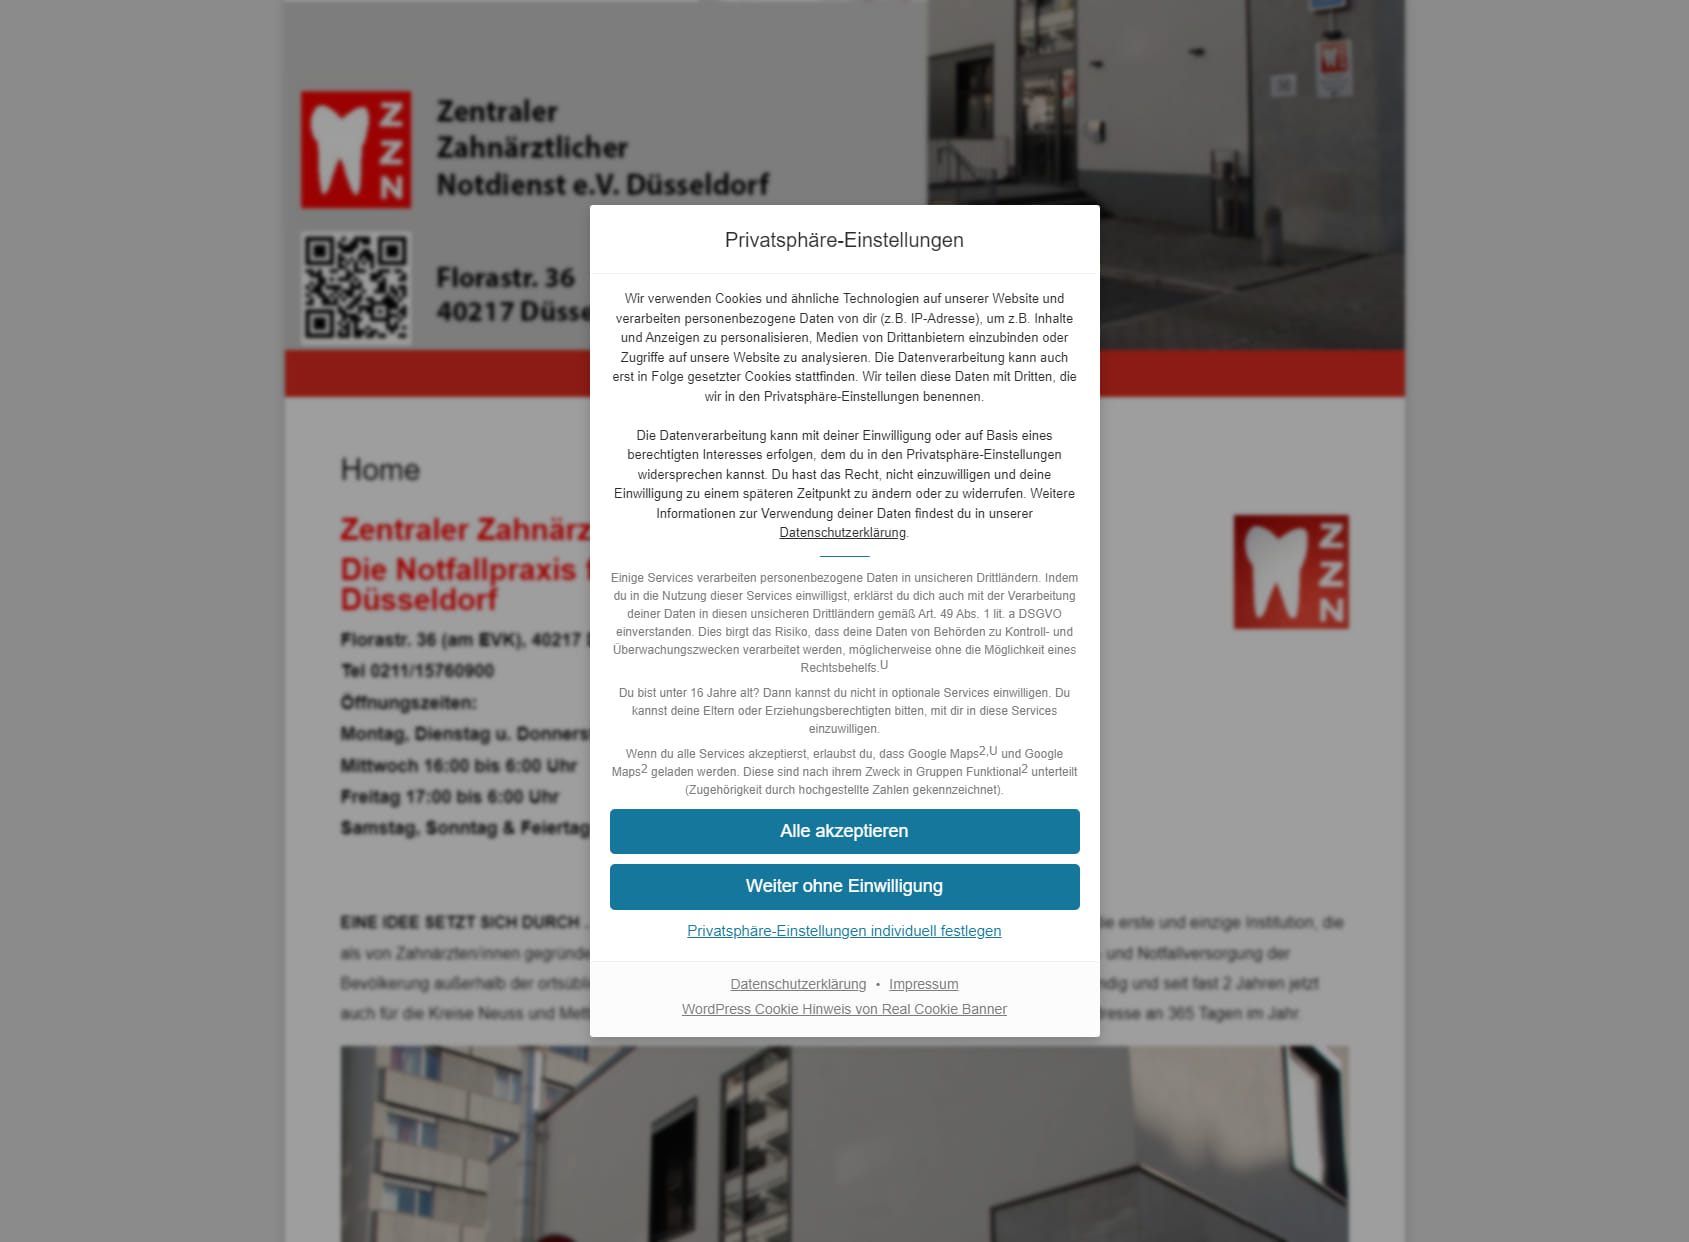 ZZN Central Emergency Dental Service e. V. Dusseldorf